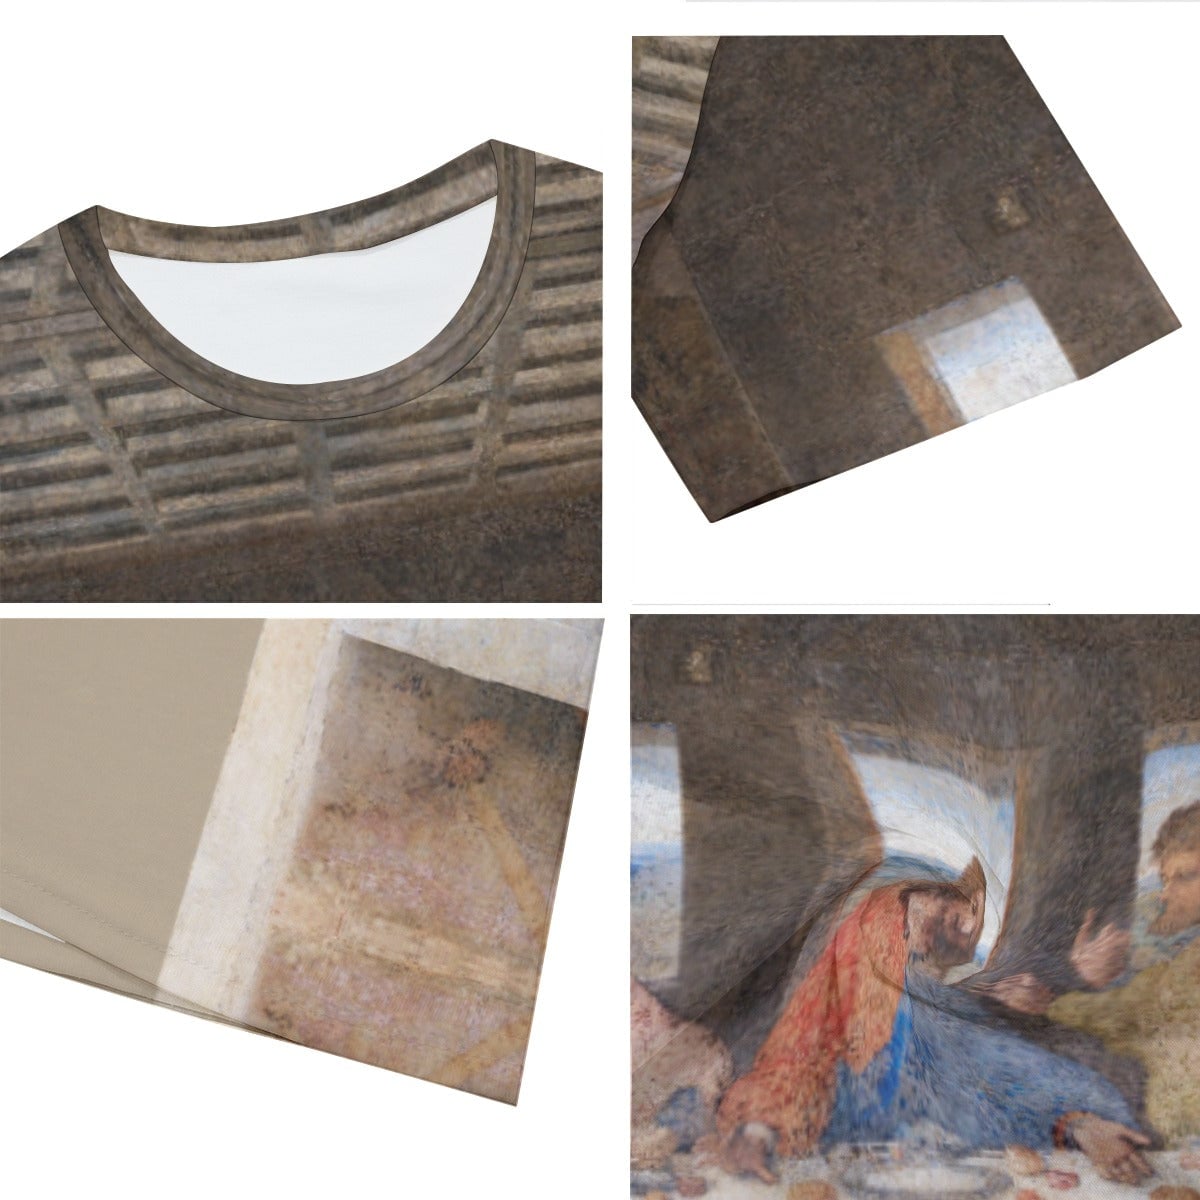 Leonardo Da Vinci The Last Supper T-Shirt